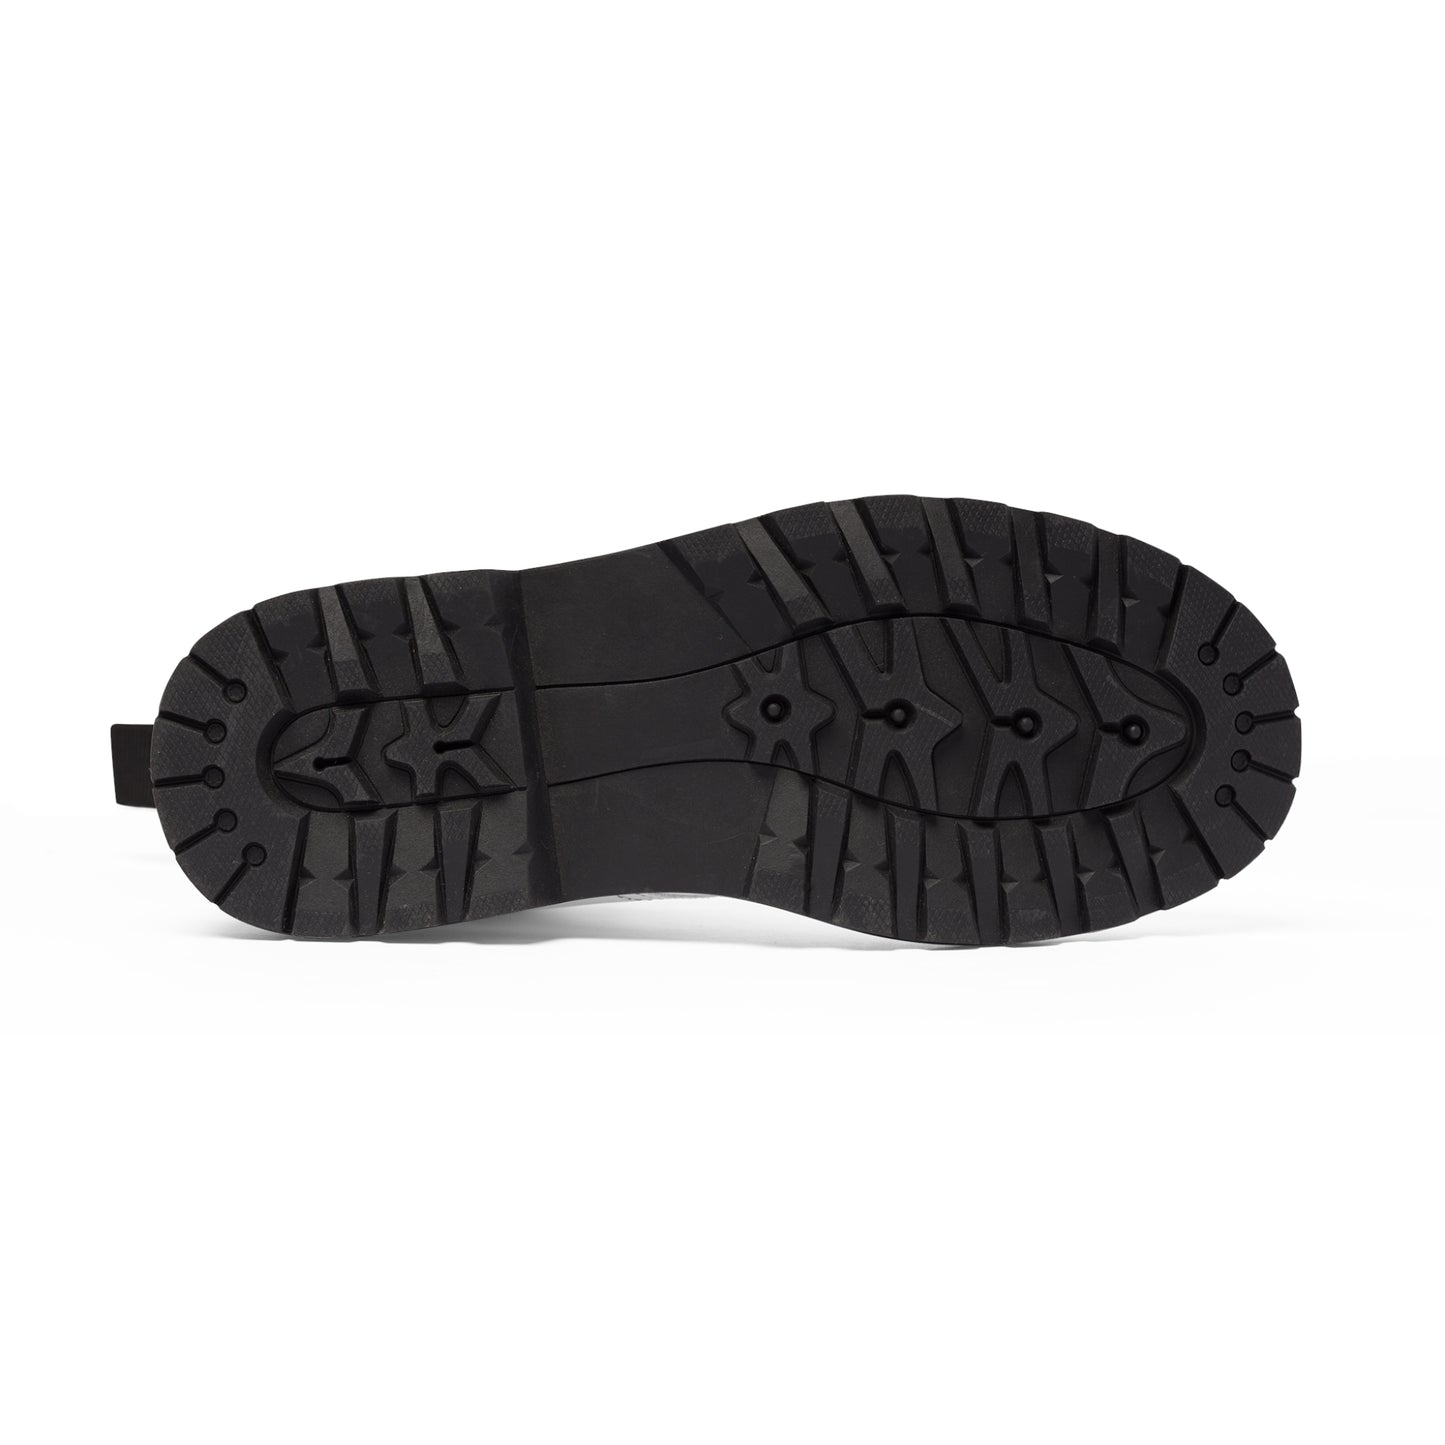 Women's Canvas Boots - Storm Gray US 11 Black sole